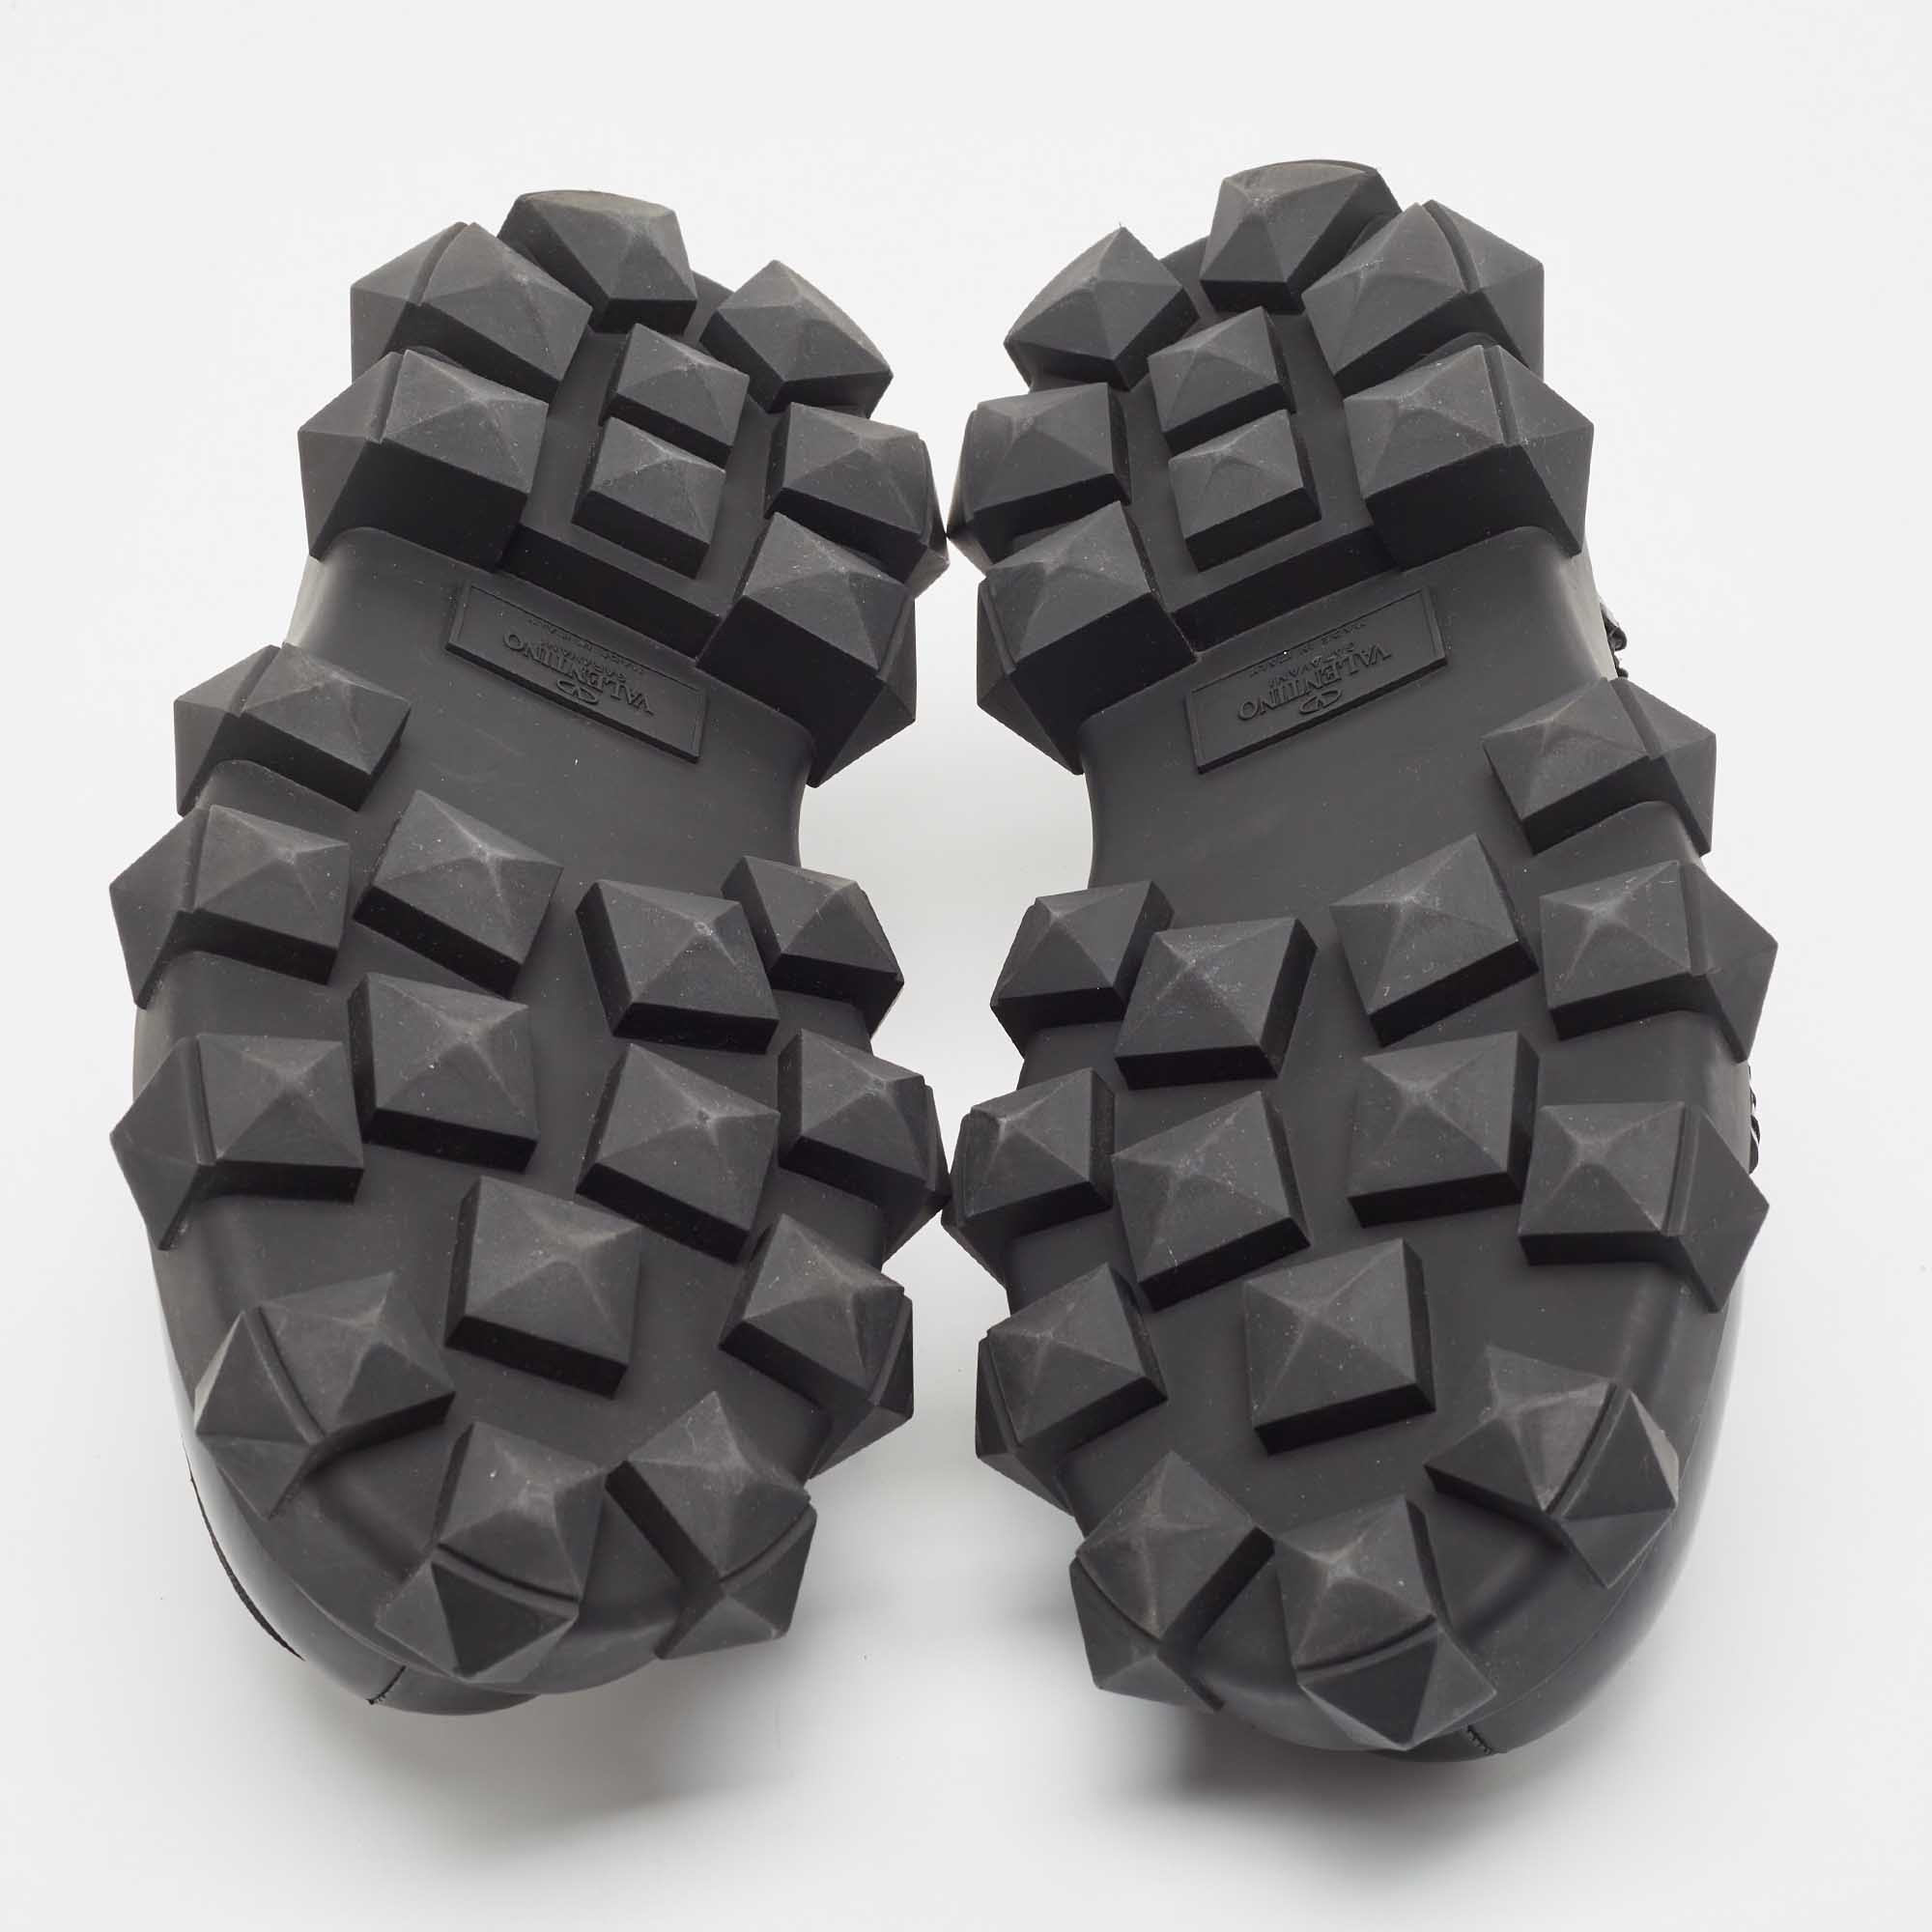 Valentino Garavani Black Leather Trackstud Loafers Size 43